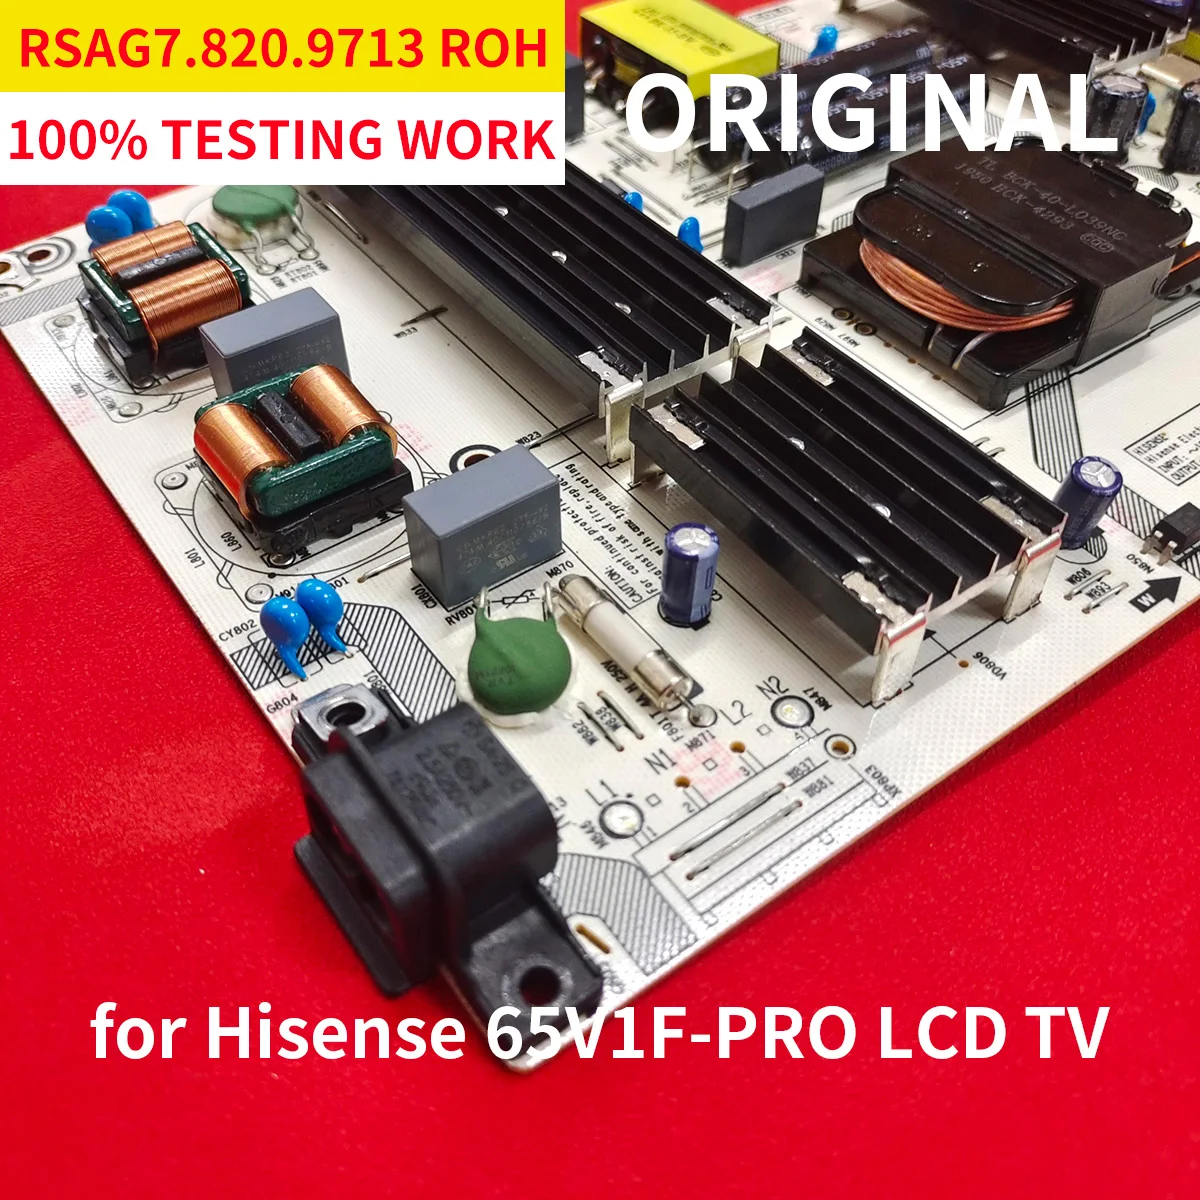 

Original power board for Hisense 65V1F-PRO LCD TV power board RSAG7.820.9713/ROH